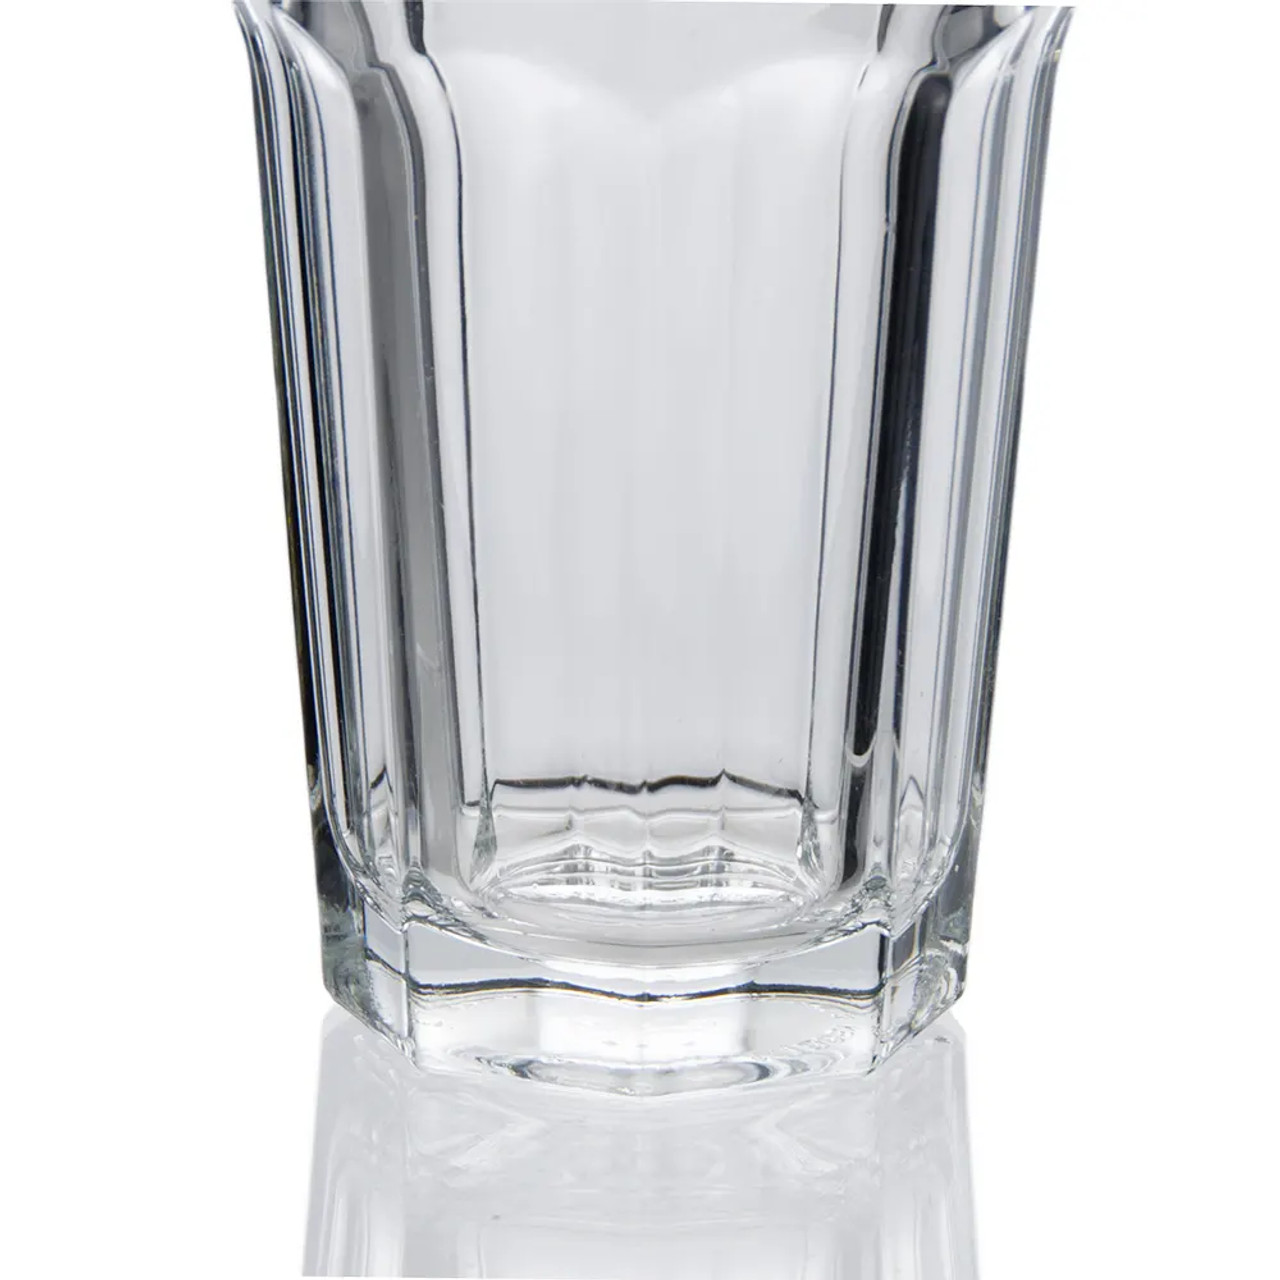 Libbey 15256 16 oz DuraTuff Gibraltar Tall Cooler Glass - Clear Glass, (24/Case)